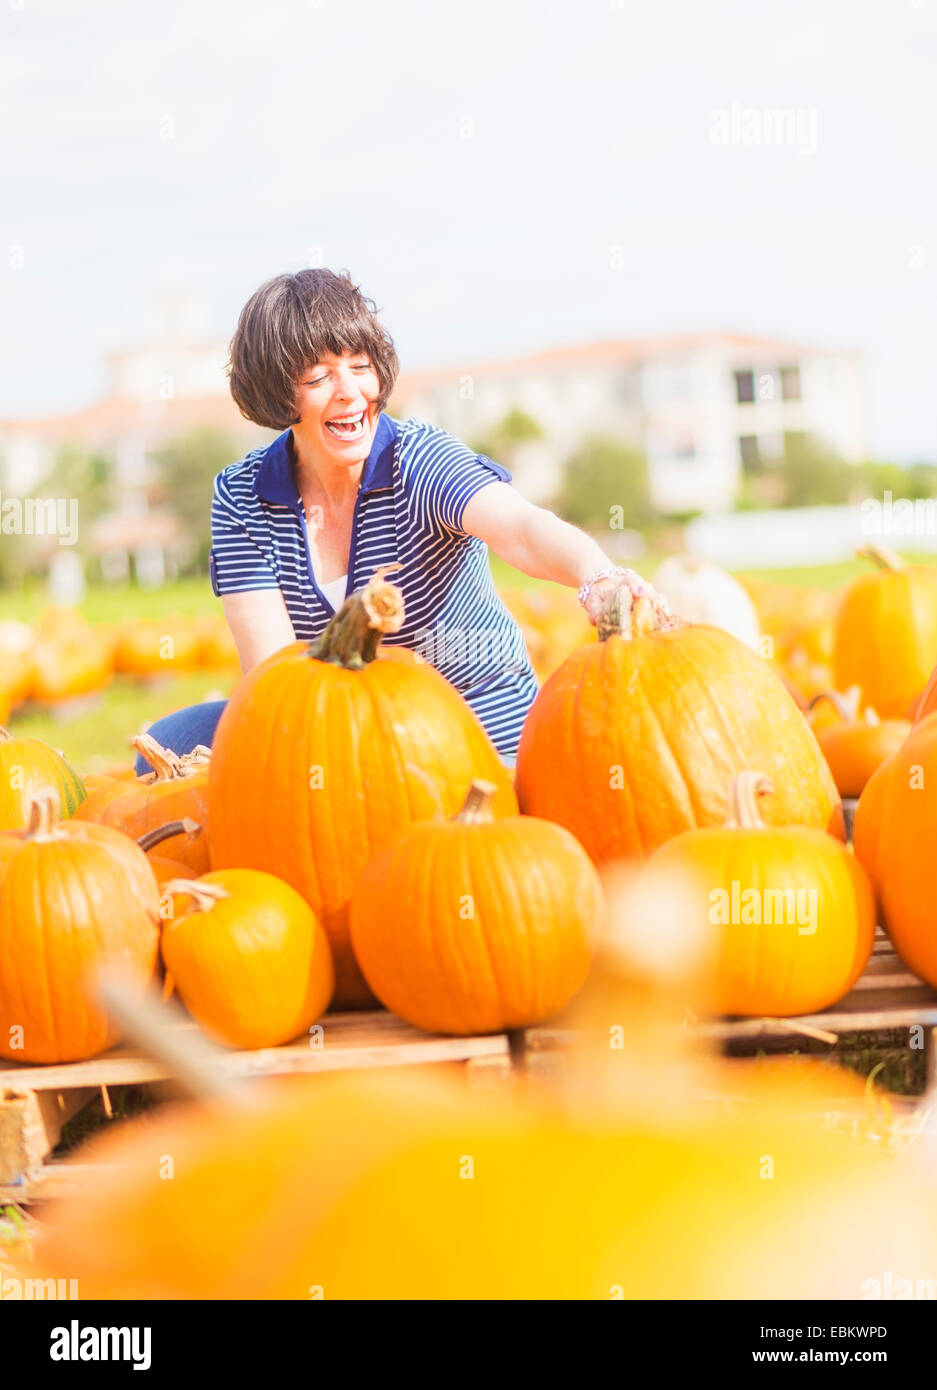 USA, Florida, Jupiter, Mature woman picking up pumpkins Stock Photo